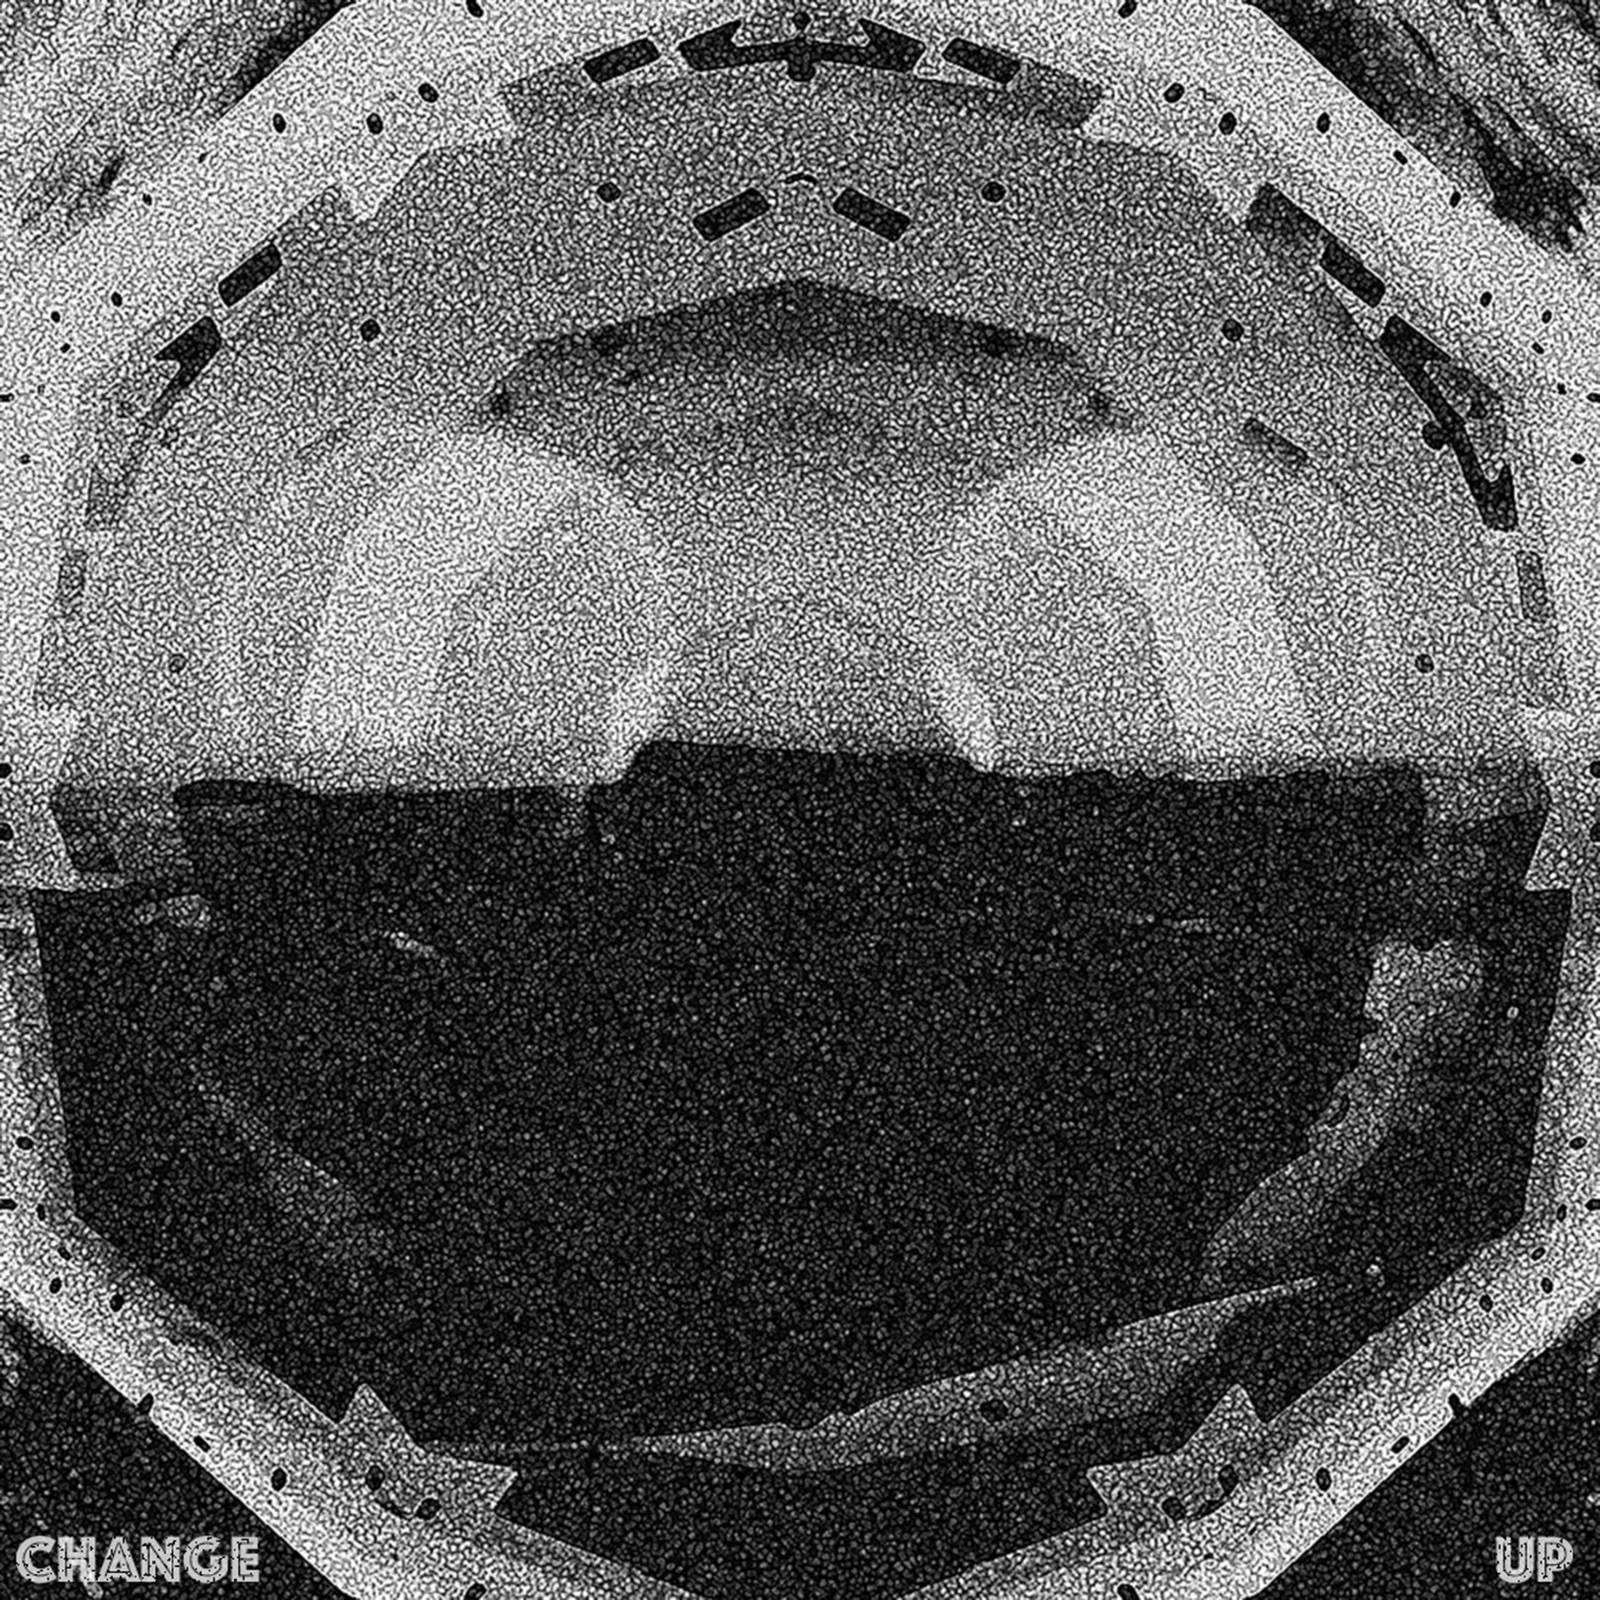 changeup - EP